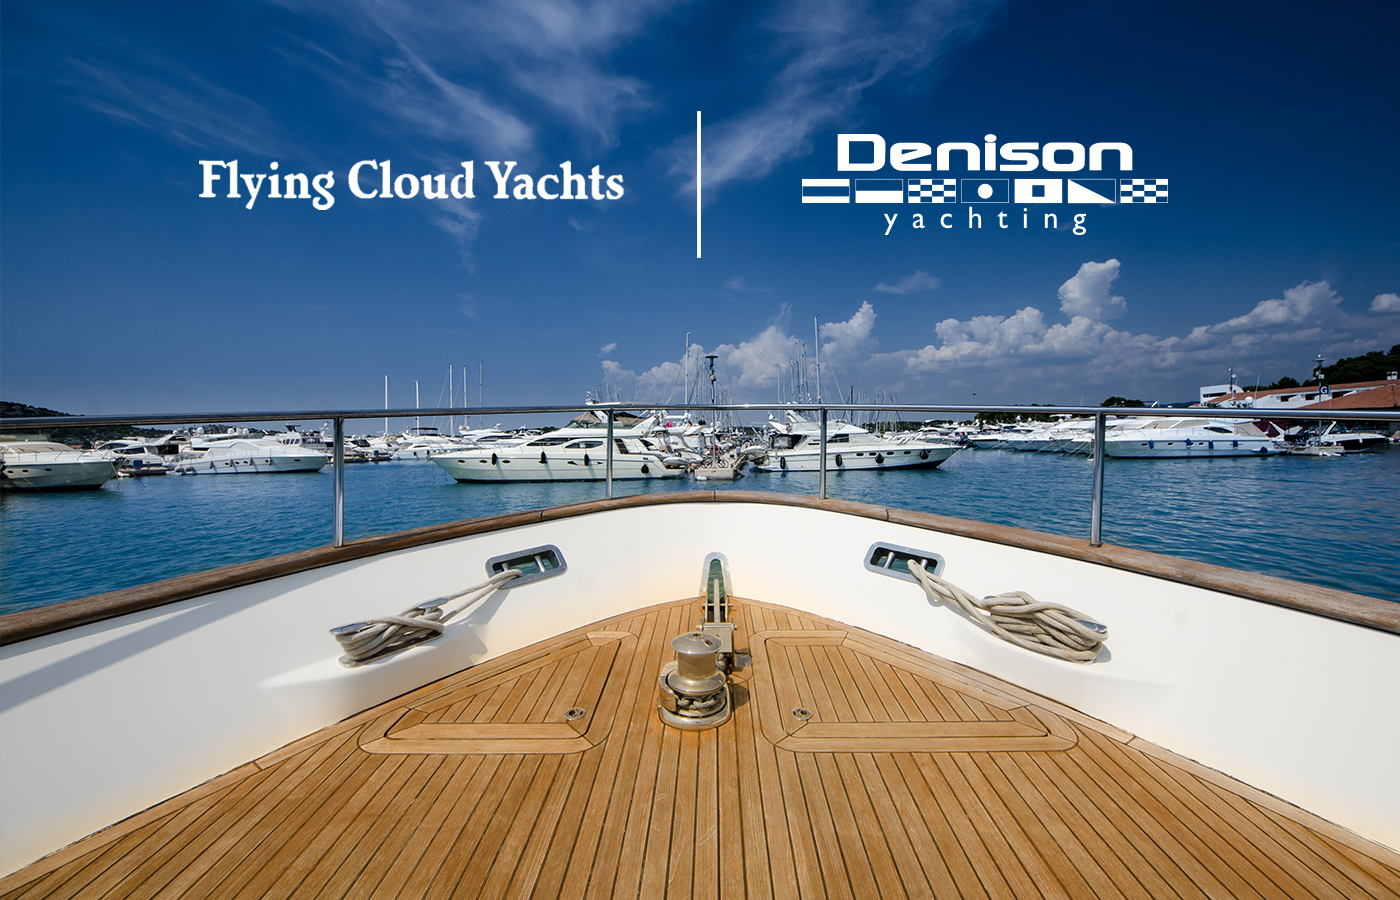 denison yachts locations